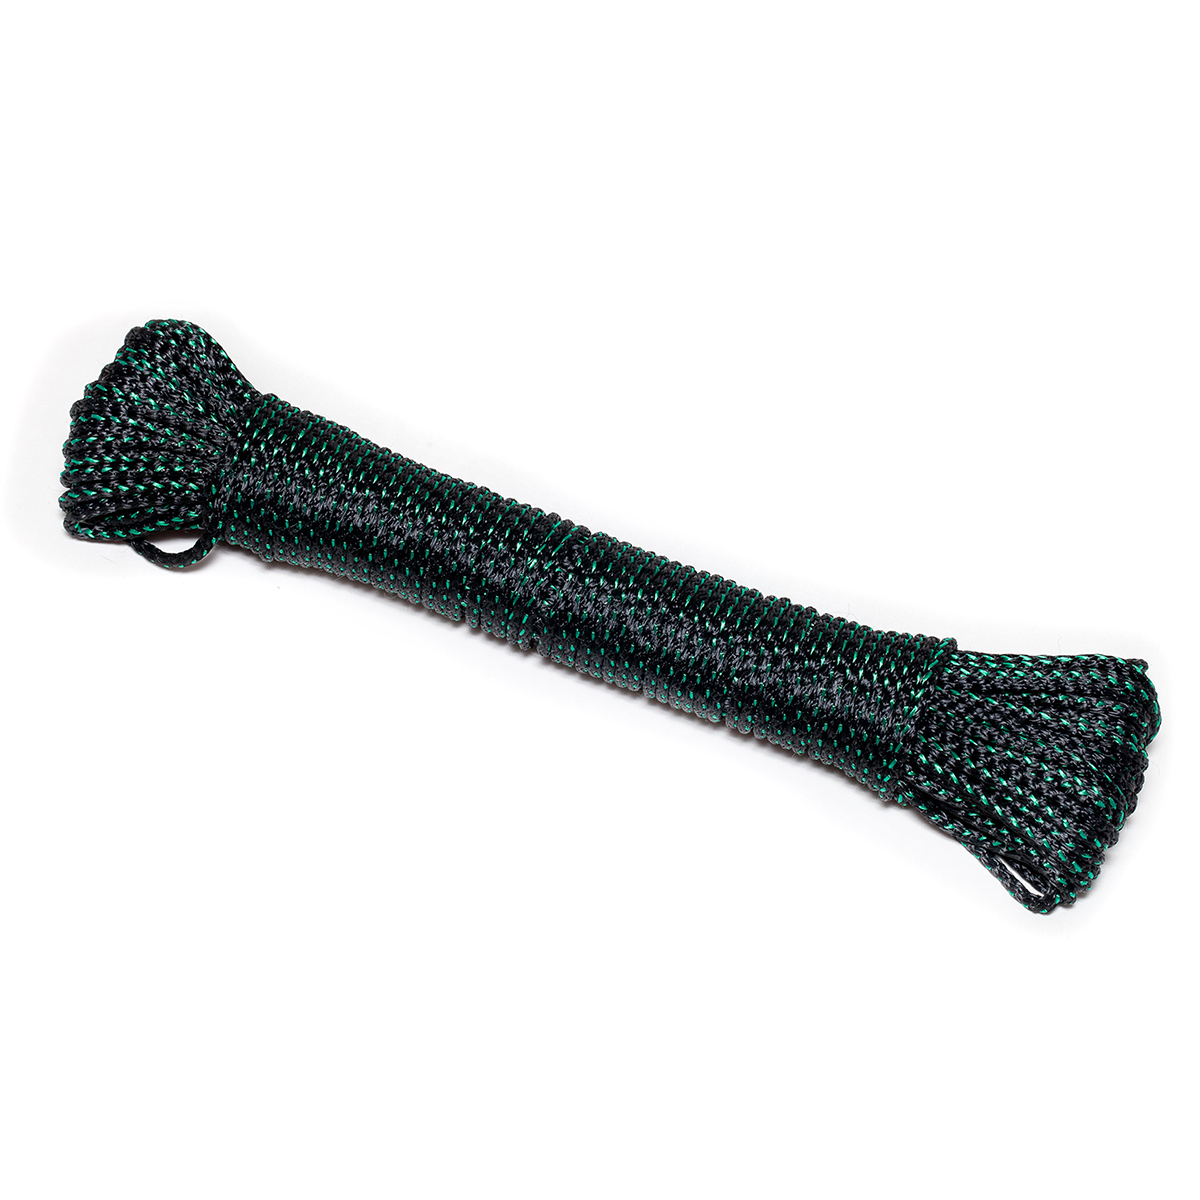 Шнур утяжеляющий Петроканат, 31 м, черно-зеленый, вес 22 г/м шнур для вязания 100% полиэфир ширина 4 мм 50м изумруд